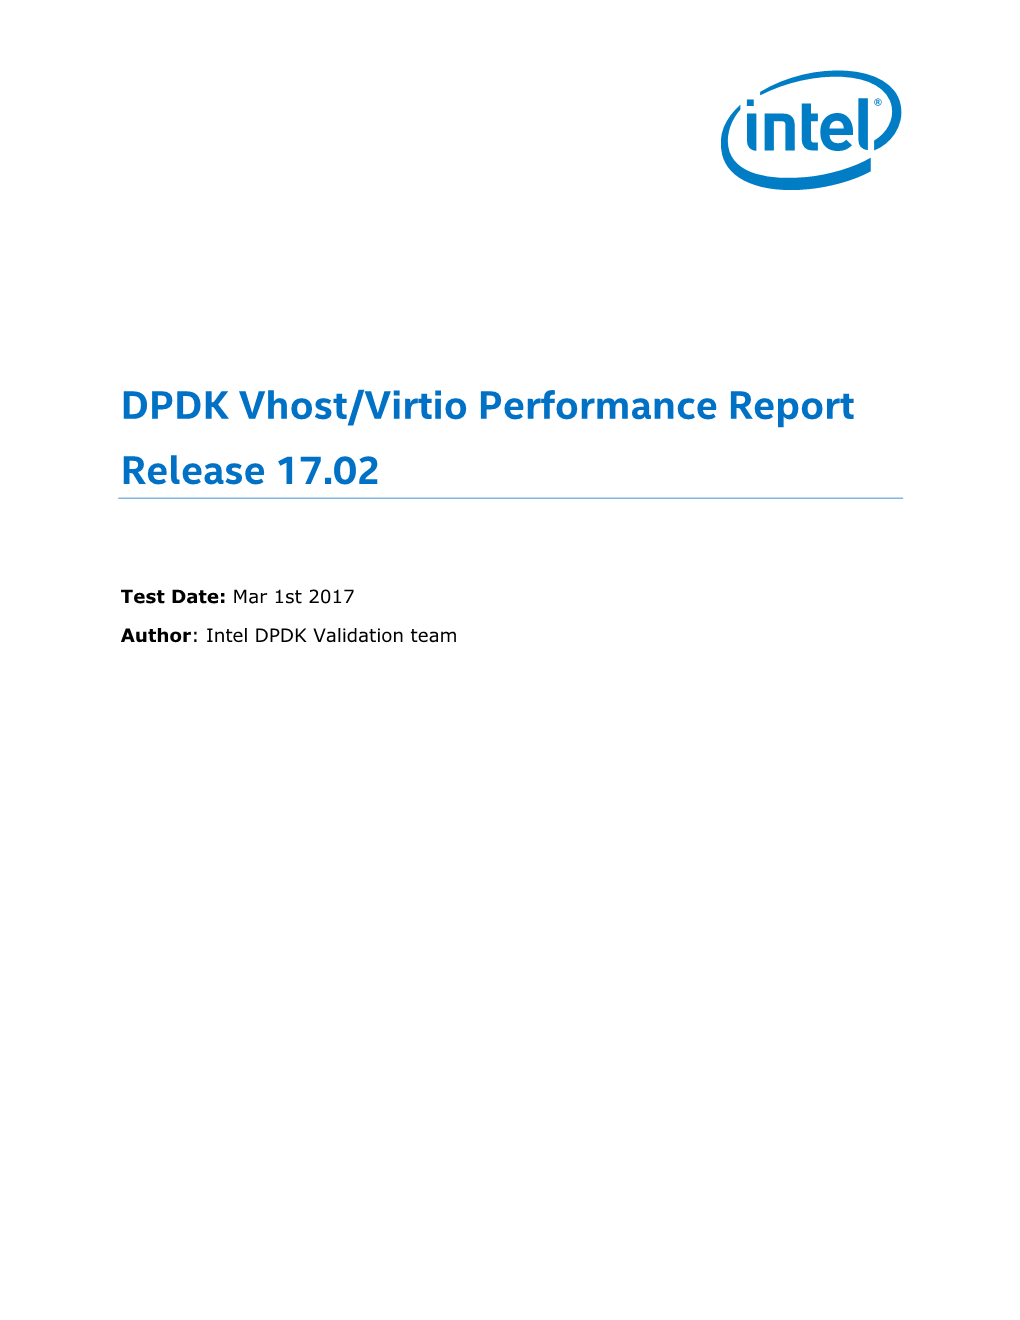 DPDK Vhost/Virtio Performance Report Release 17.02